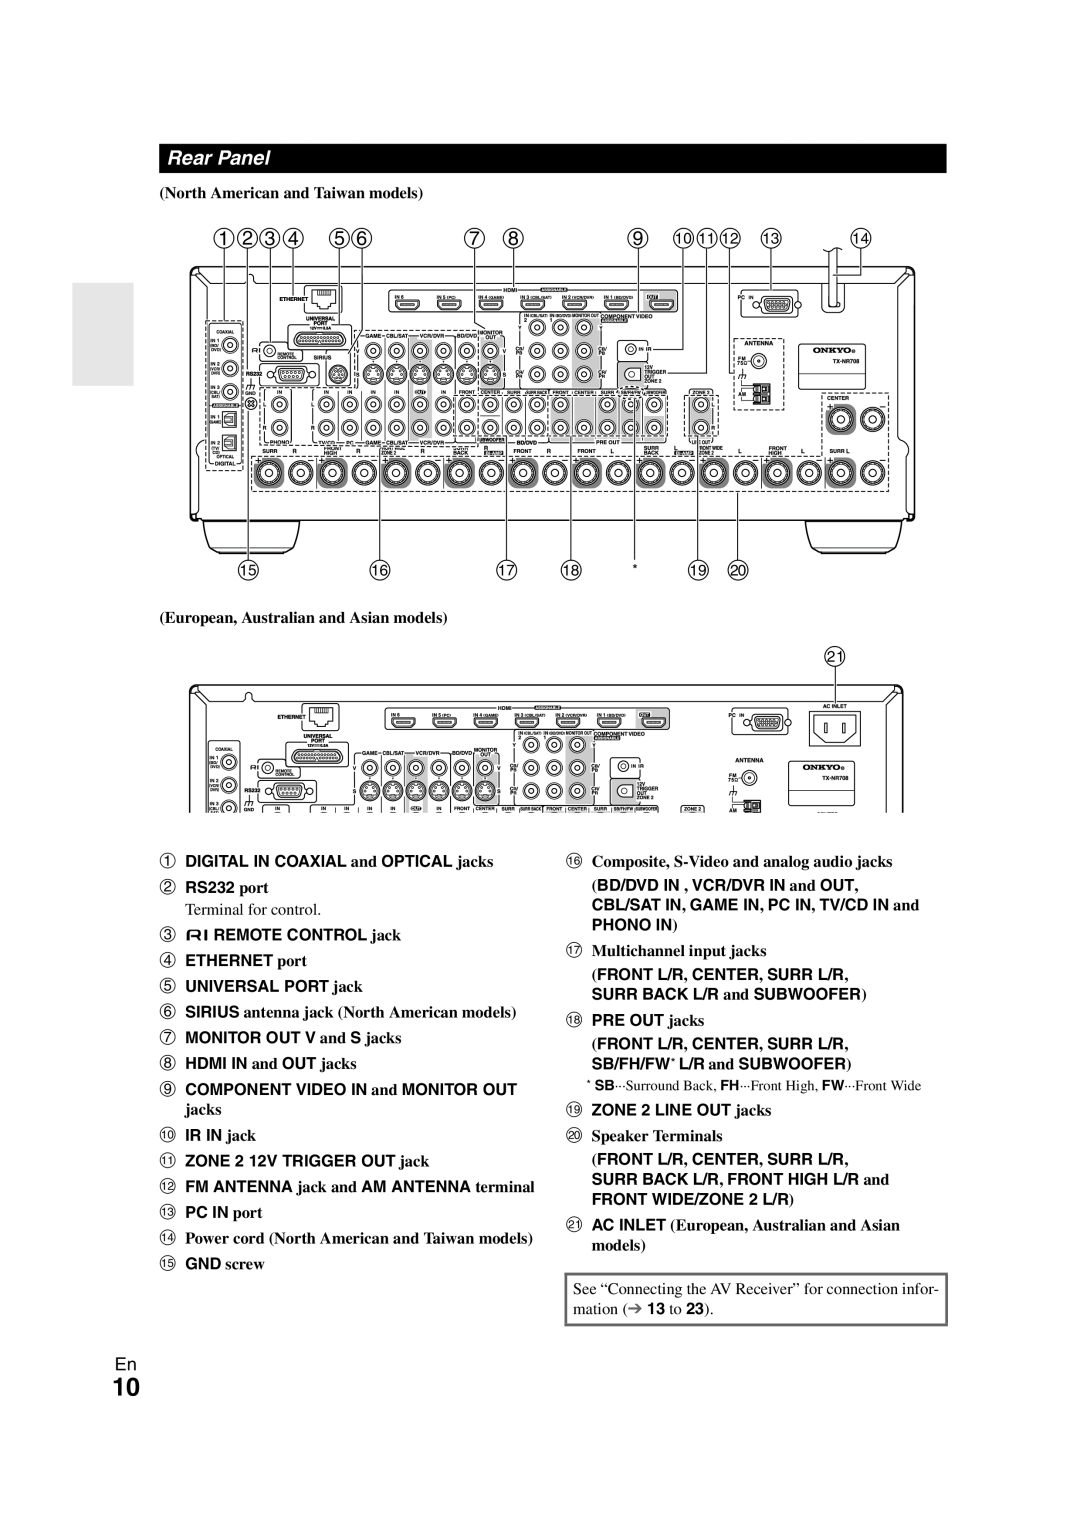 Onkyo TX-NR708 instruction manual abcd ef 